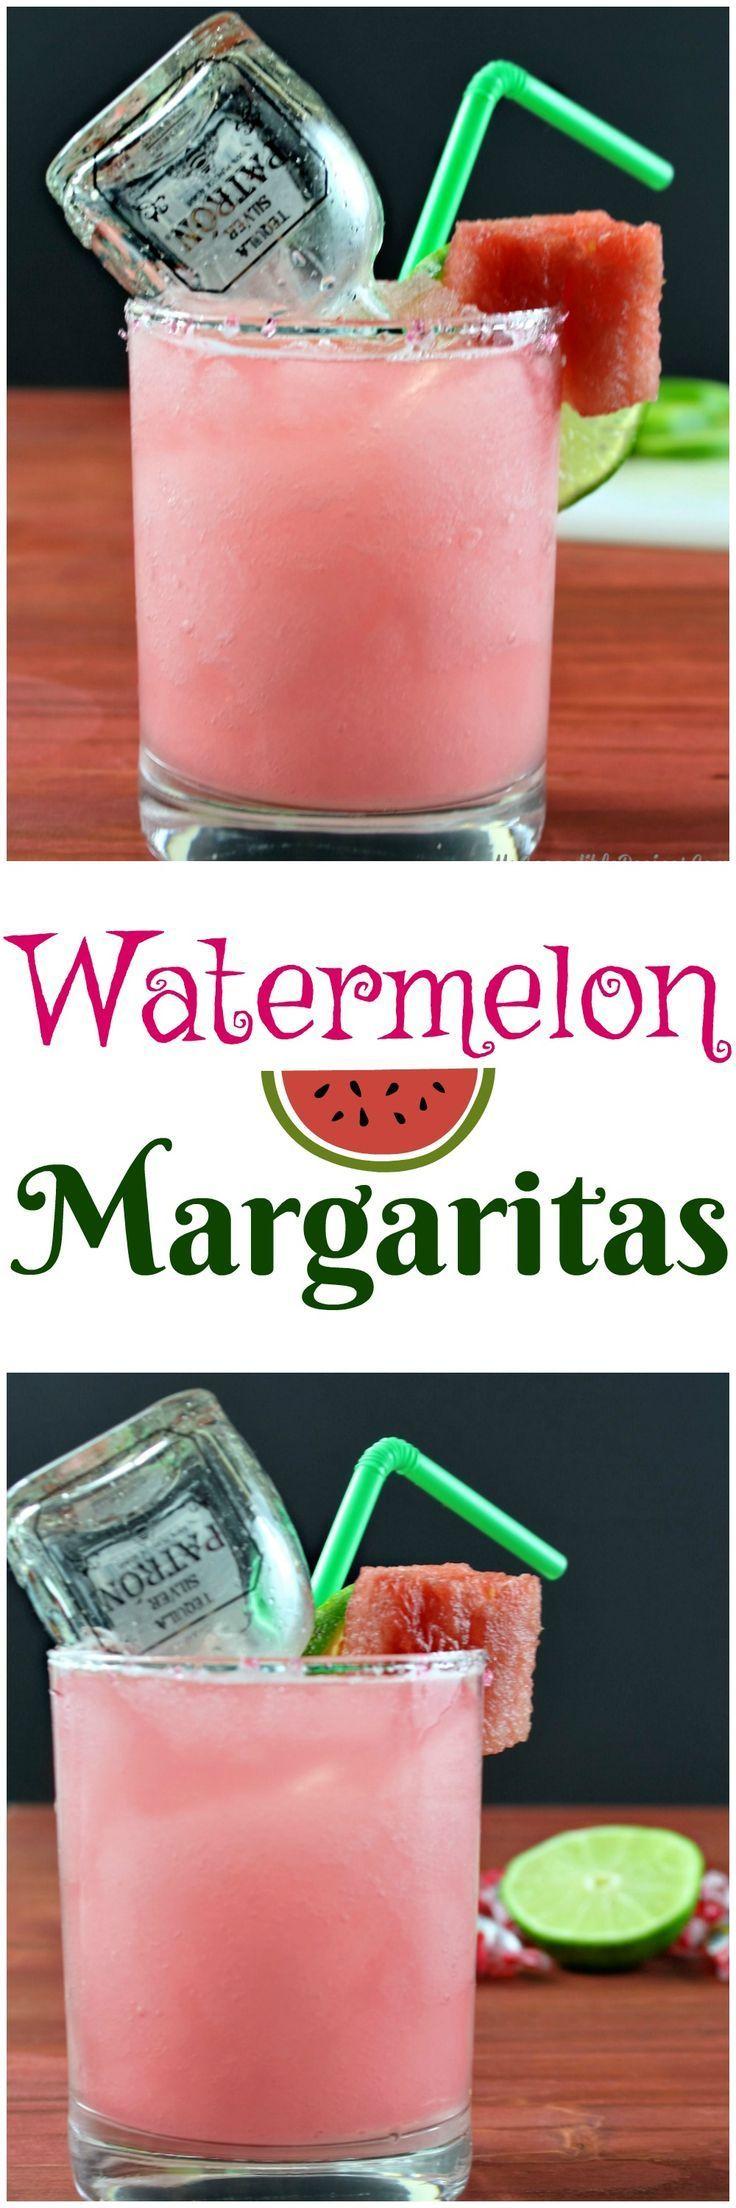 Wedding - Watermelon Margaritas